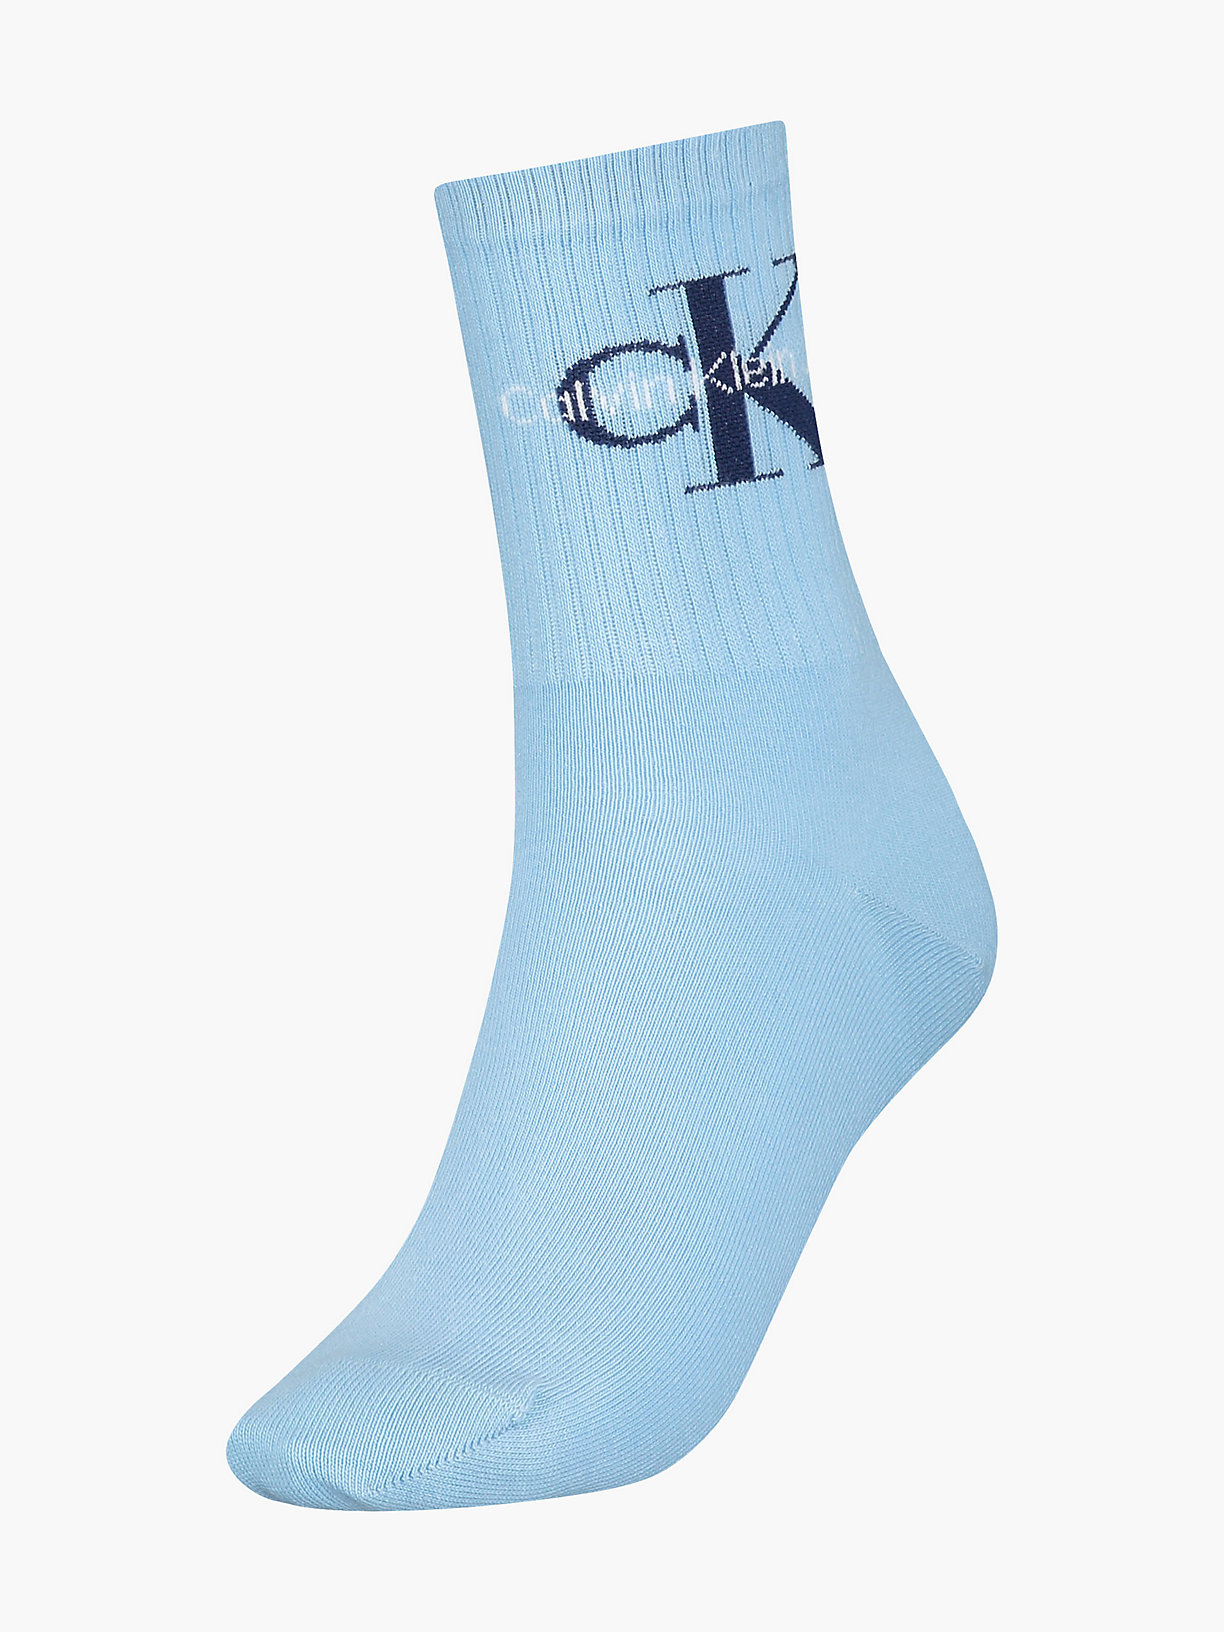 Descubrir 76+ imagen calvin klein blue socks